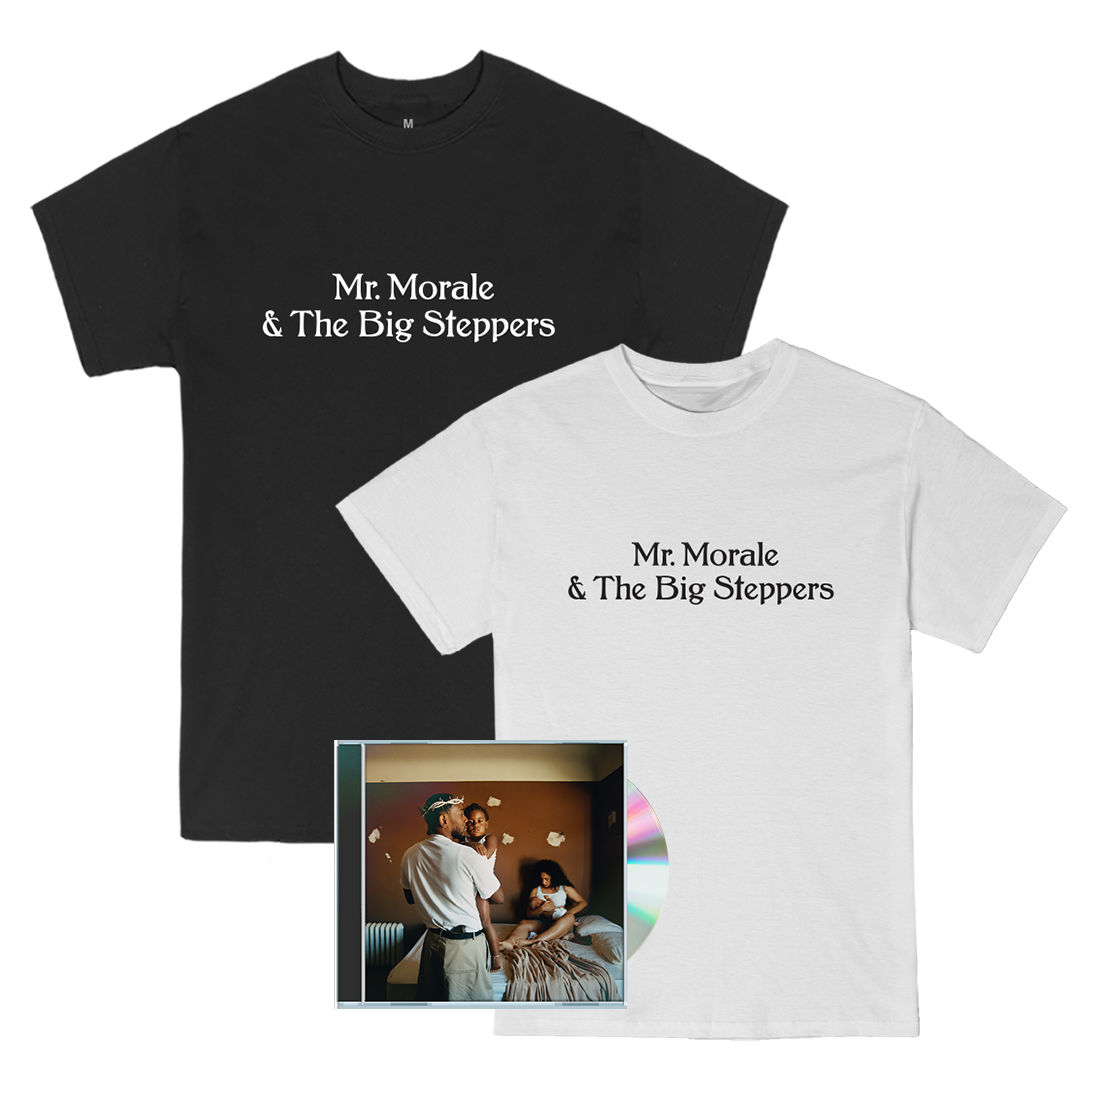 Mr. Morale & The Big Steppers: CD, T-Shirt (White) & T-Shirt (Black)